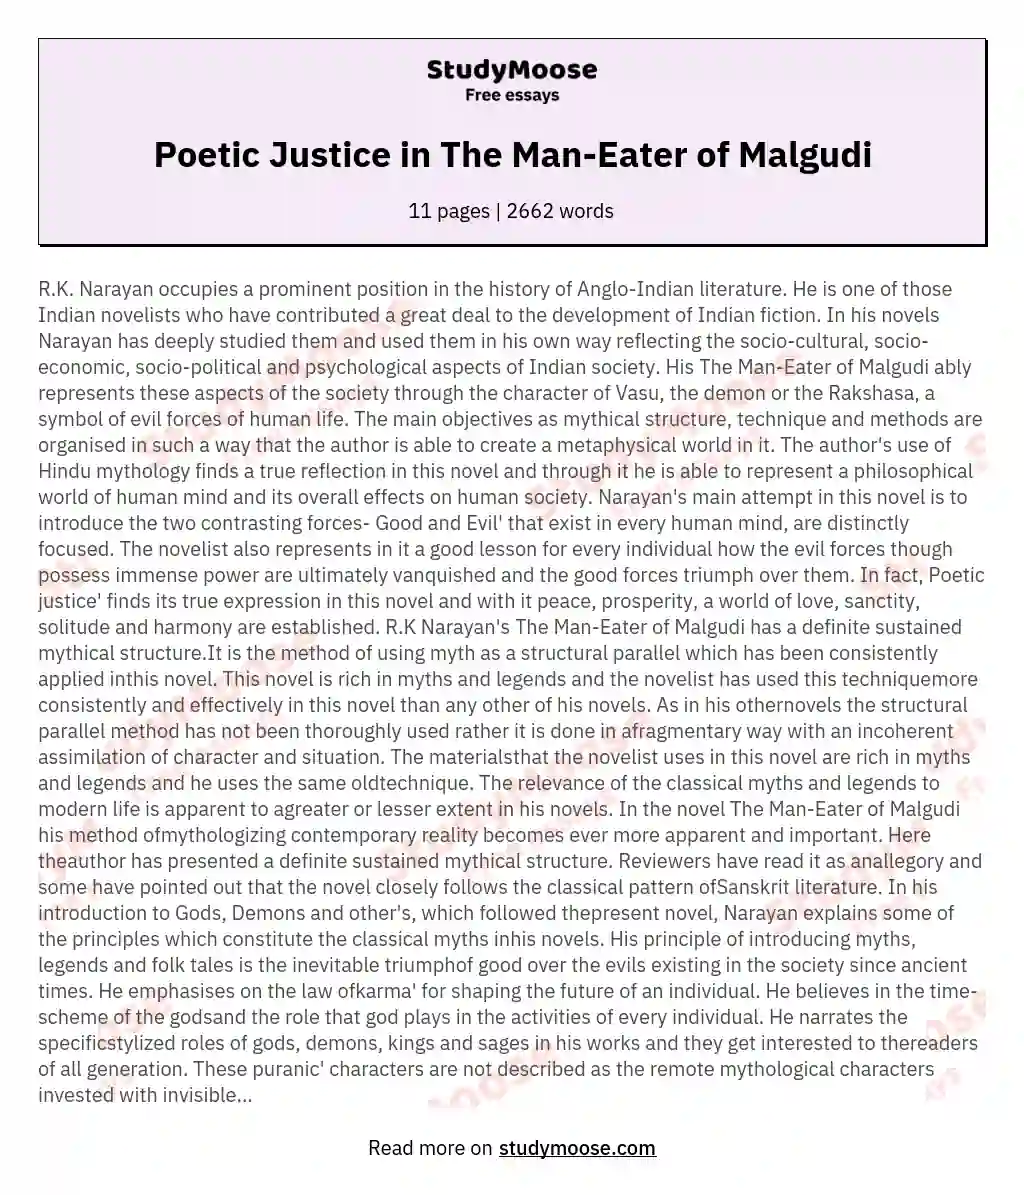 Poetic Justice in The Man-Eater of Malgudi essay